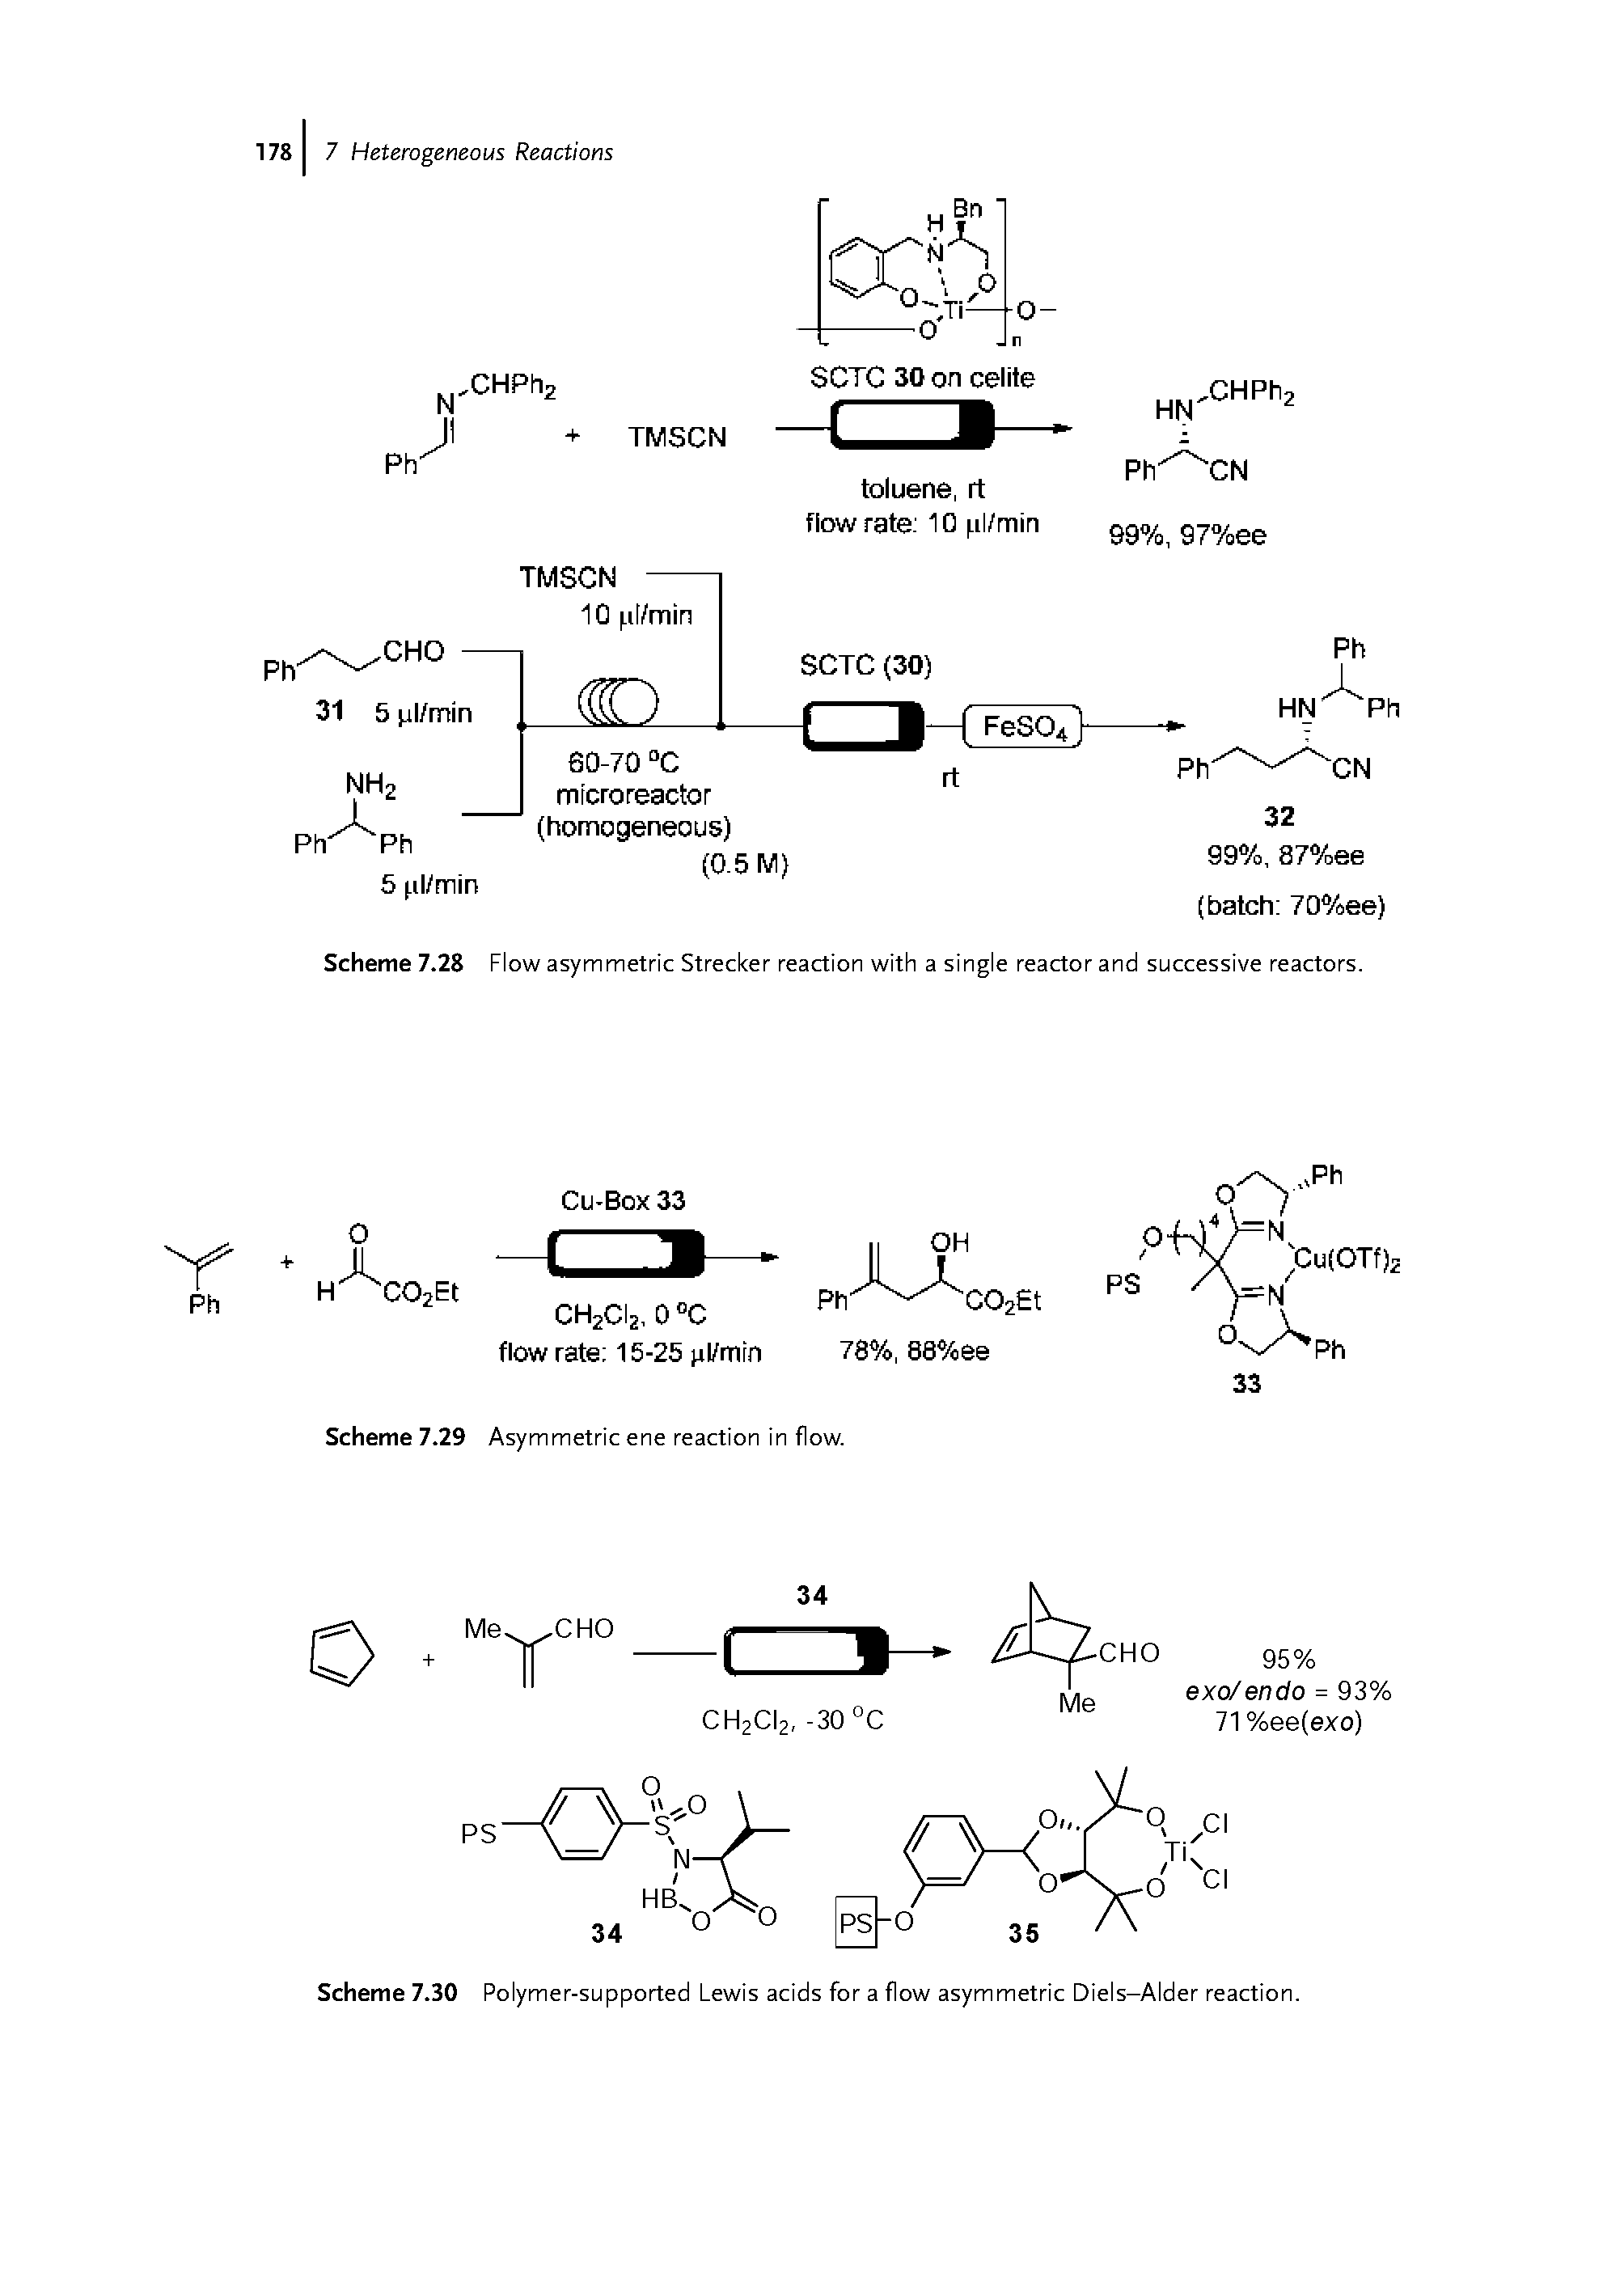 Scheme 7.30 Polymer-supported Lewis acids for a flow asymmetric Diels-Alder reaction.